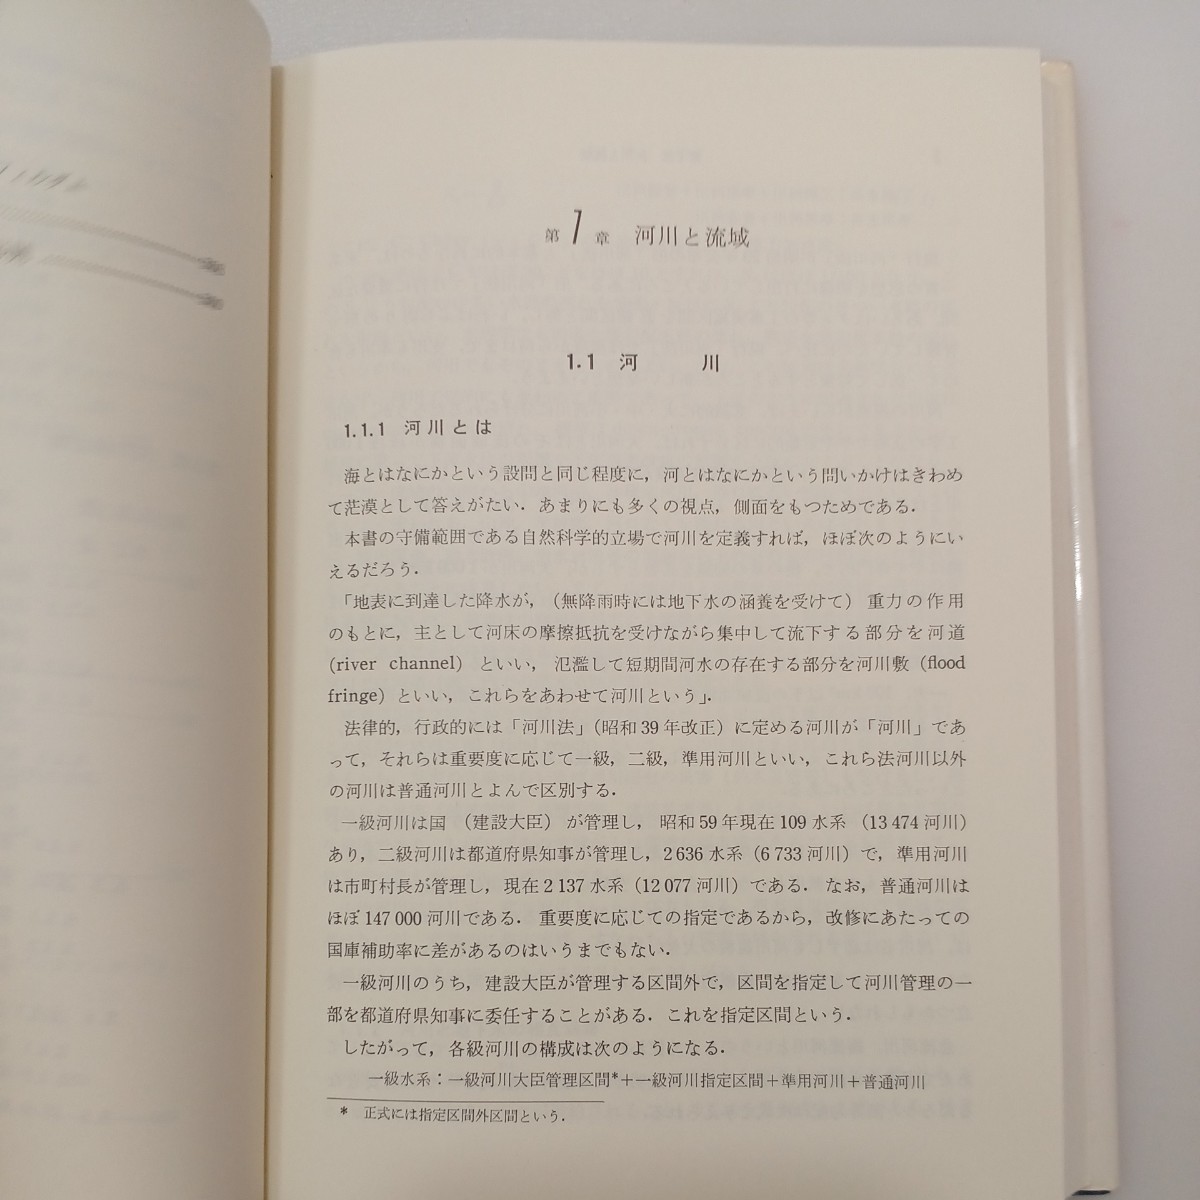 zaa-550♪河川工学 単行本 室田 明 (編集) 技報堂出版 (1991/2/20)_画像5